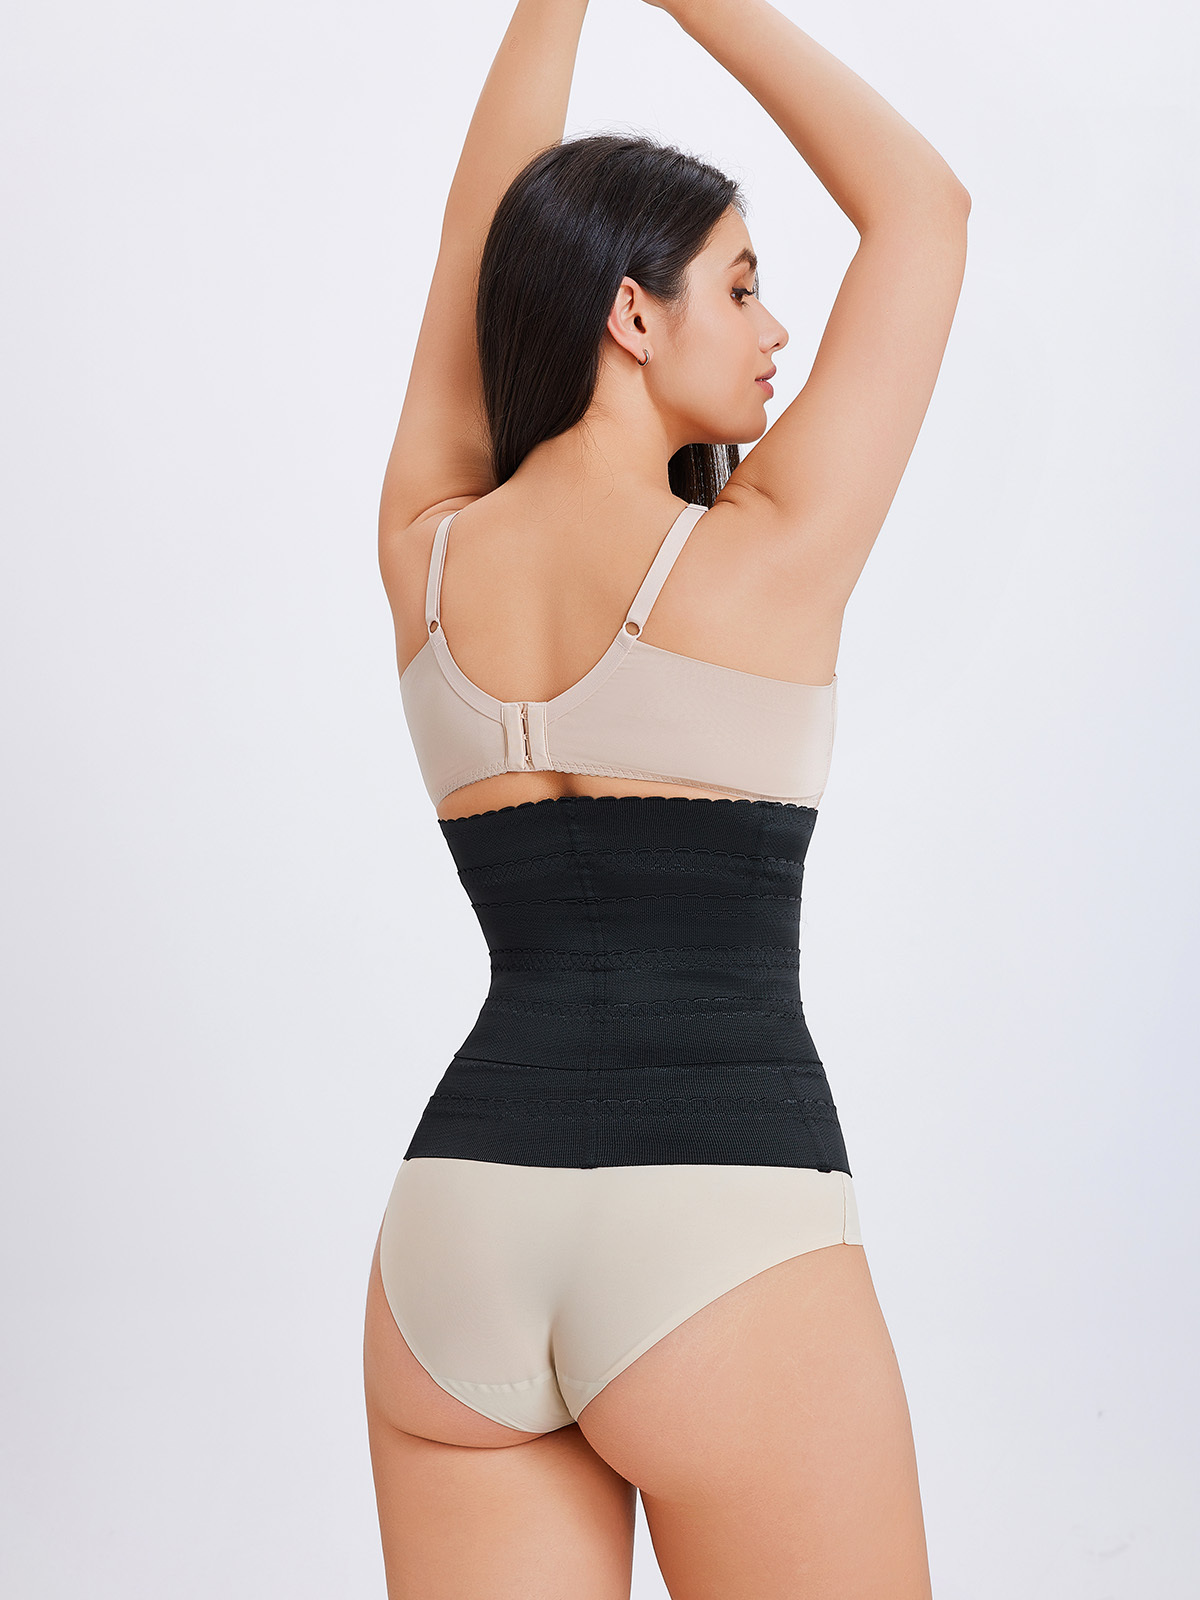 Nebility Womens' Waist Trainer Tummy Control Waist Cincher Slim Body Shaper